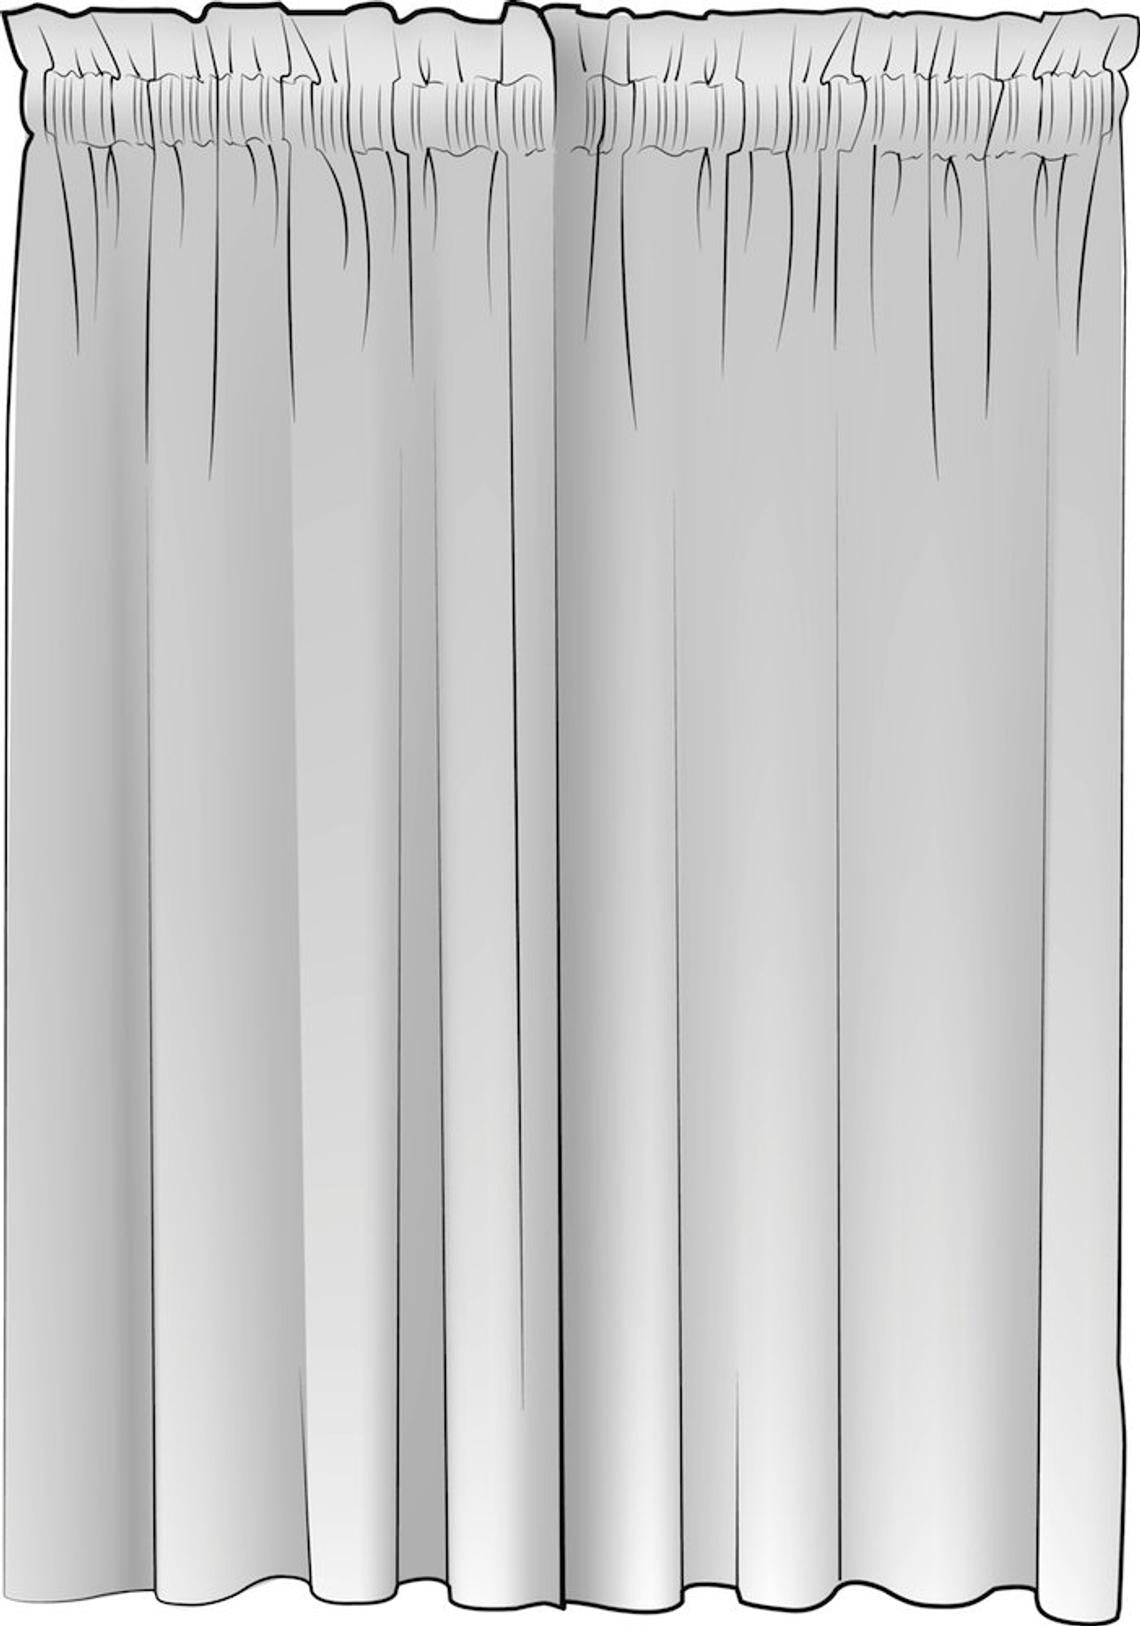 rod pocket curtain panels pair in feabhra slate gray diamond medallion - blue, tan, large scale